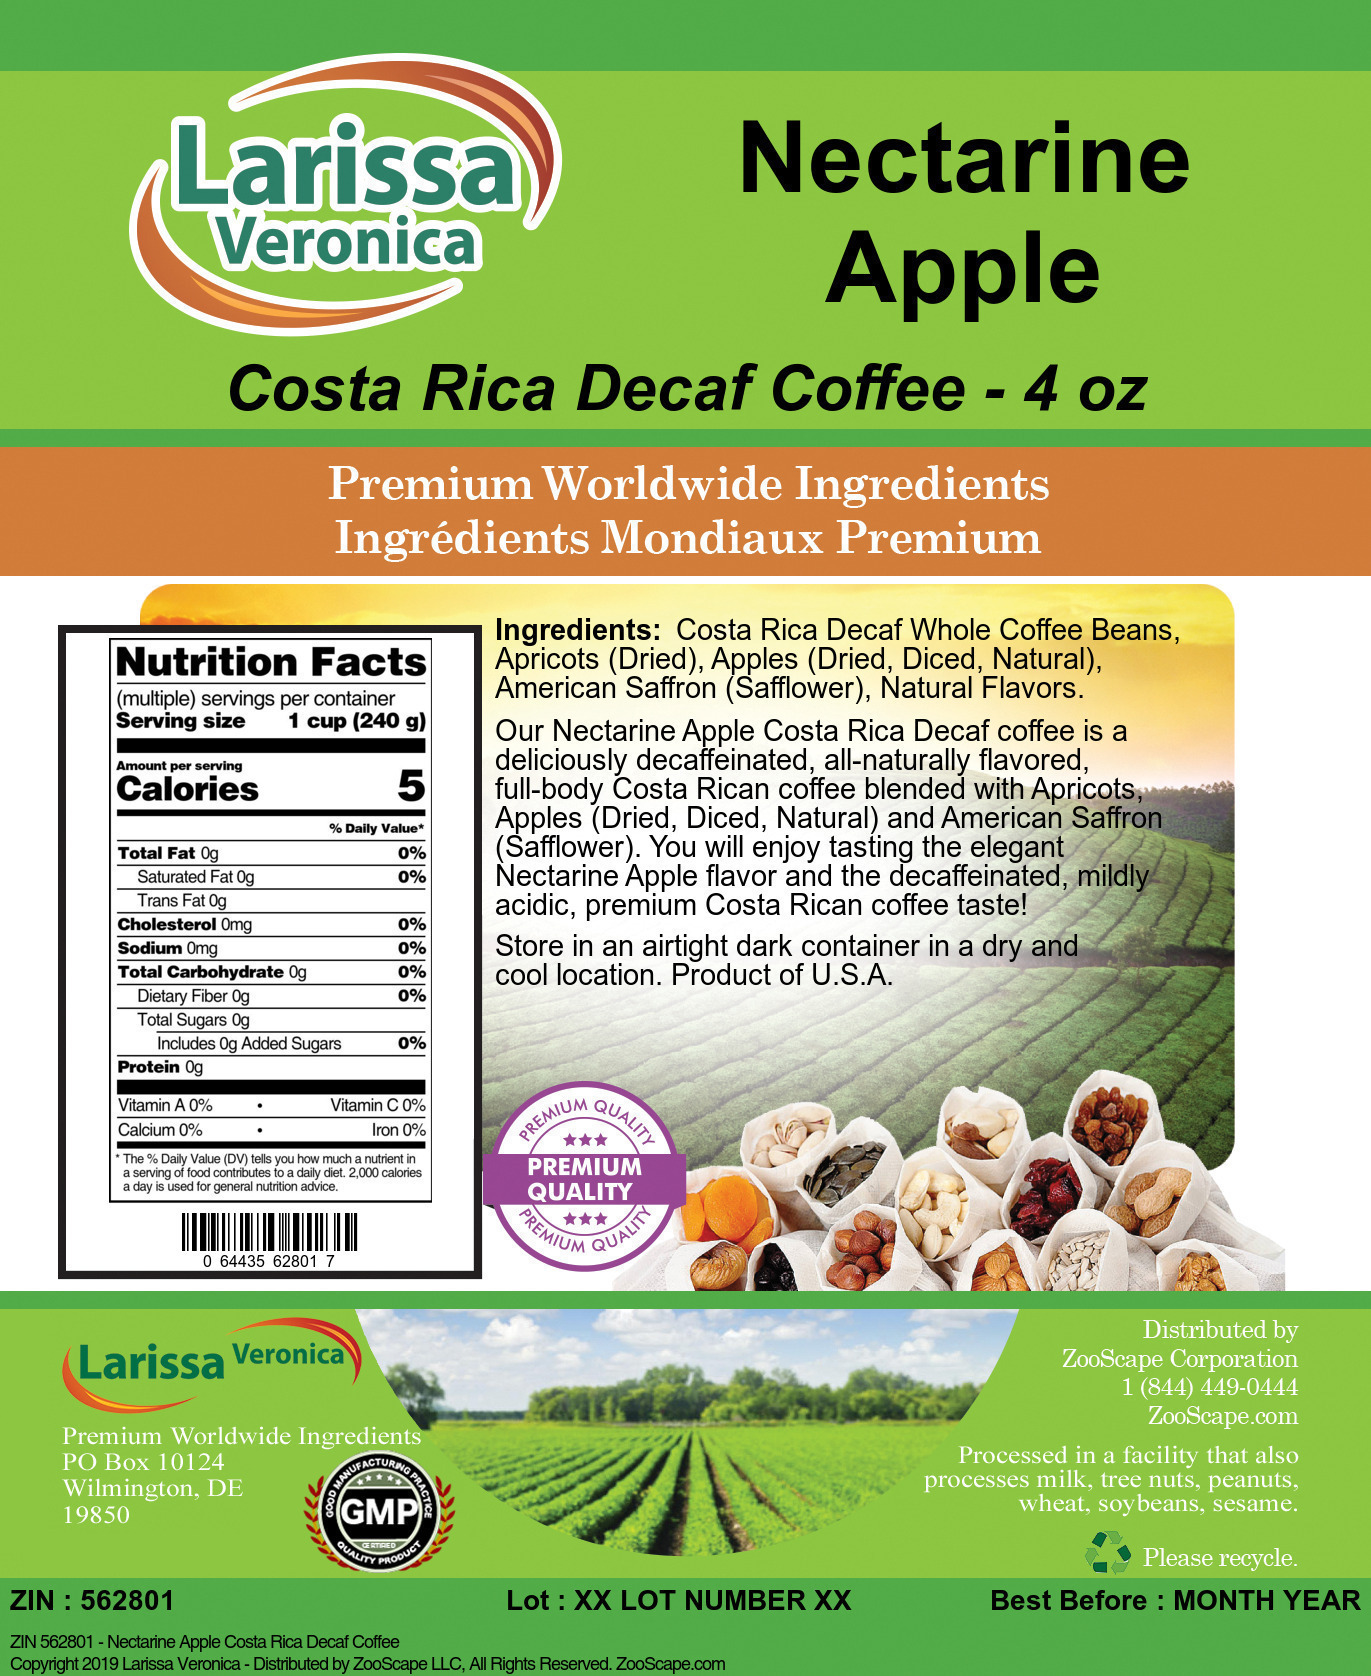 Nectarine Apple Costa Rica Decaf Coffee - Label